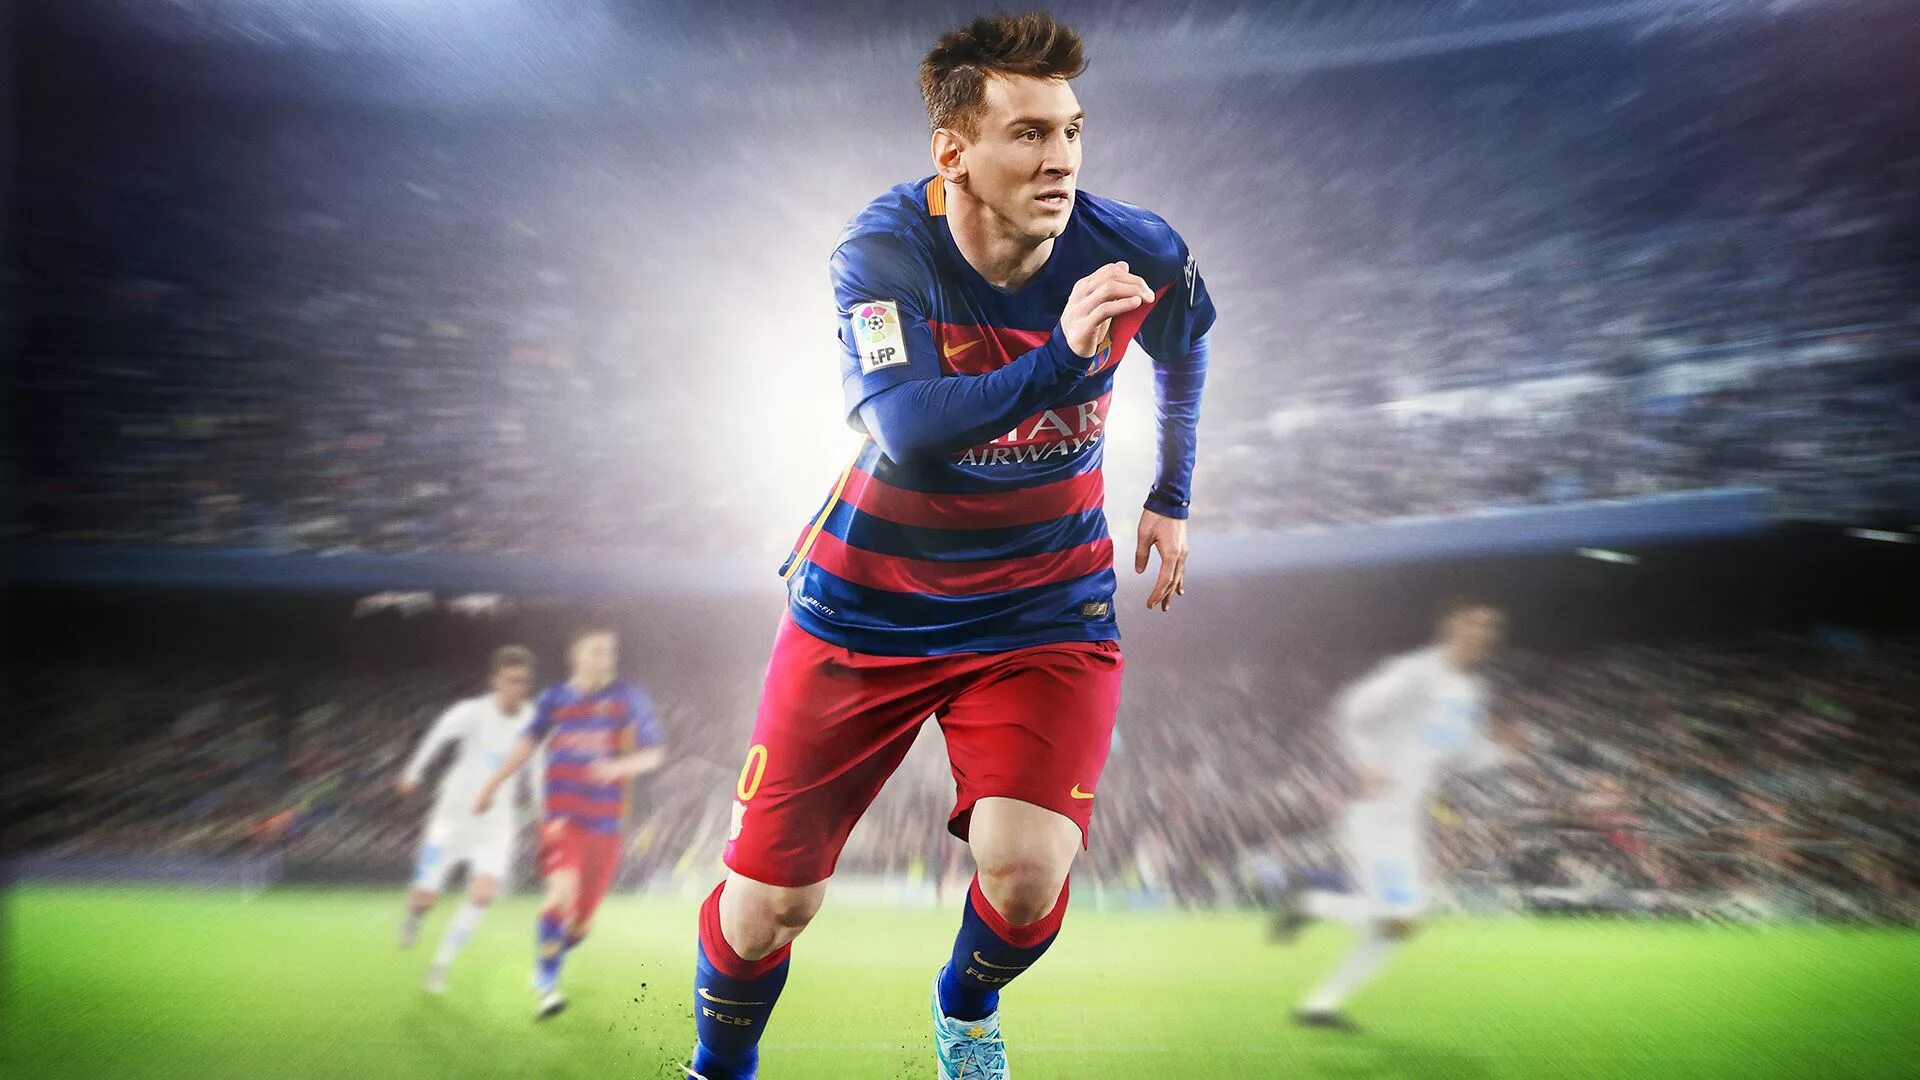 Messi FIFA. Футбол в фифе Месси. FIFA 16. Месси 2015 ФИФА.